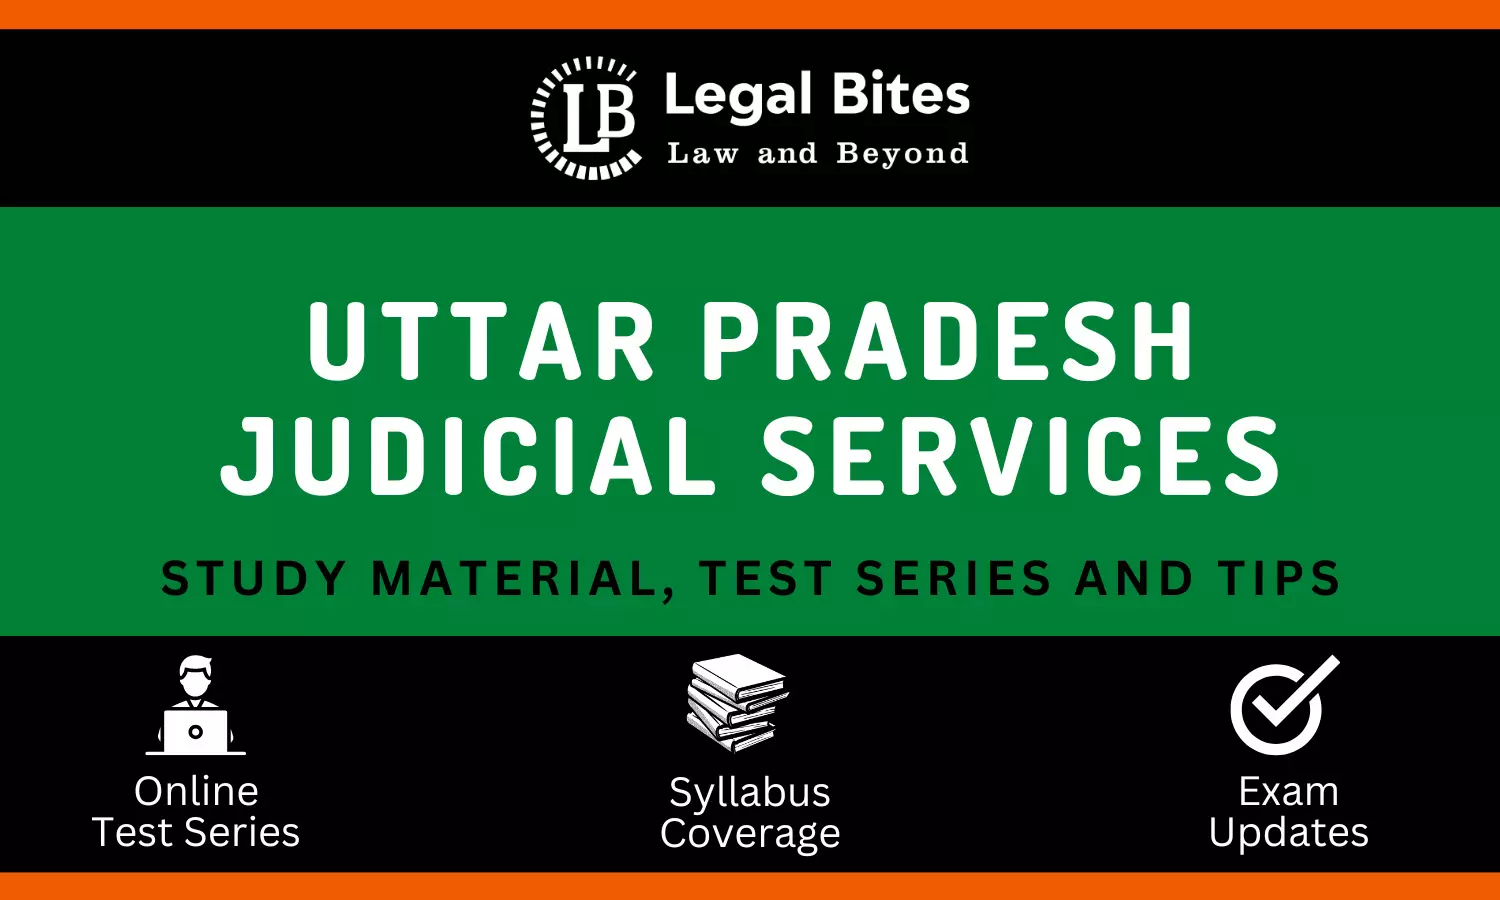 Uttar Pradesh Judicial Services: UPPSCJ Study Material, Test Series and Tips